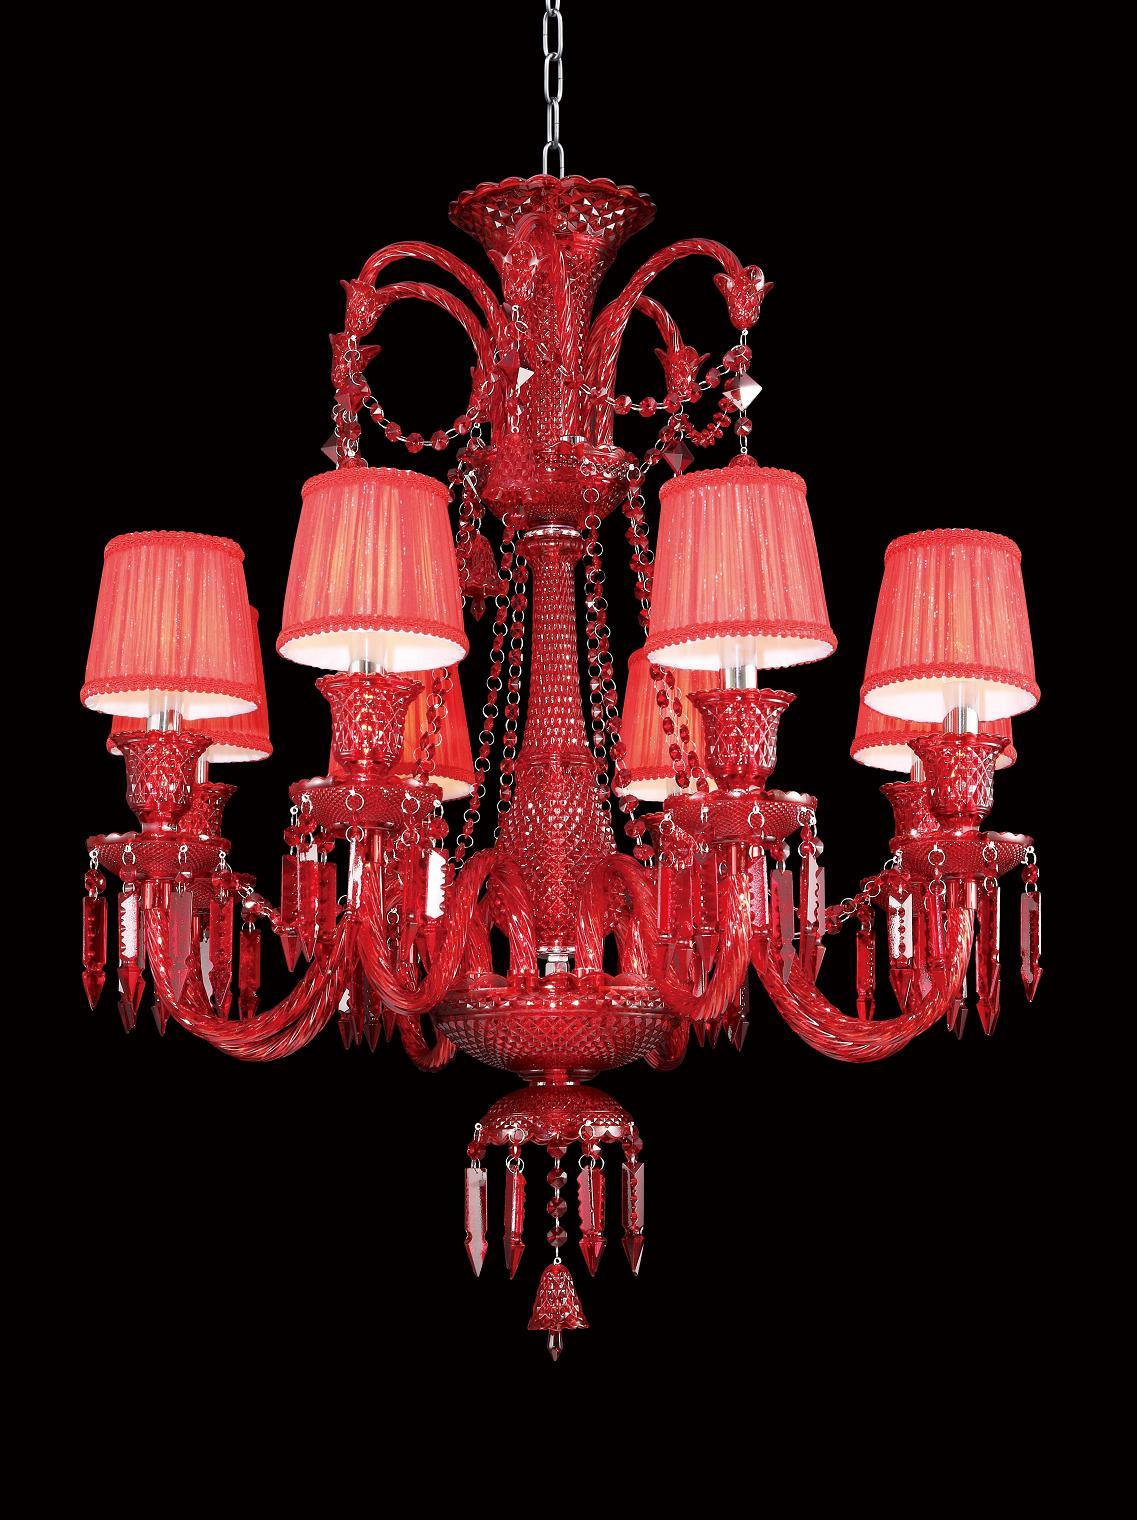 Popular Home Decoration Red Glass Chandelier (KD1308-8)